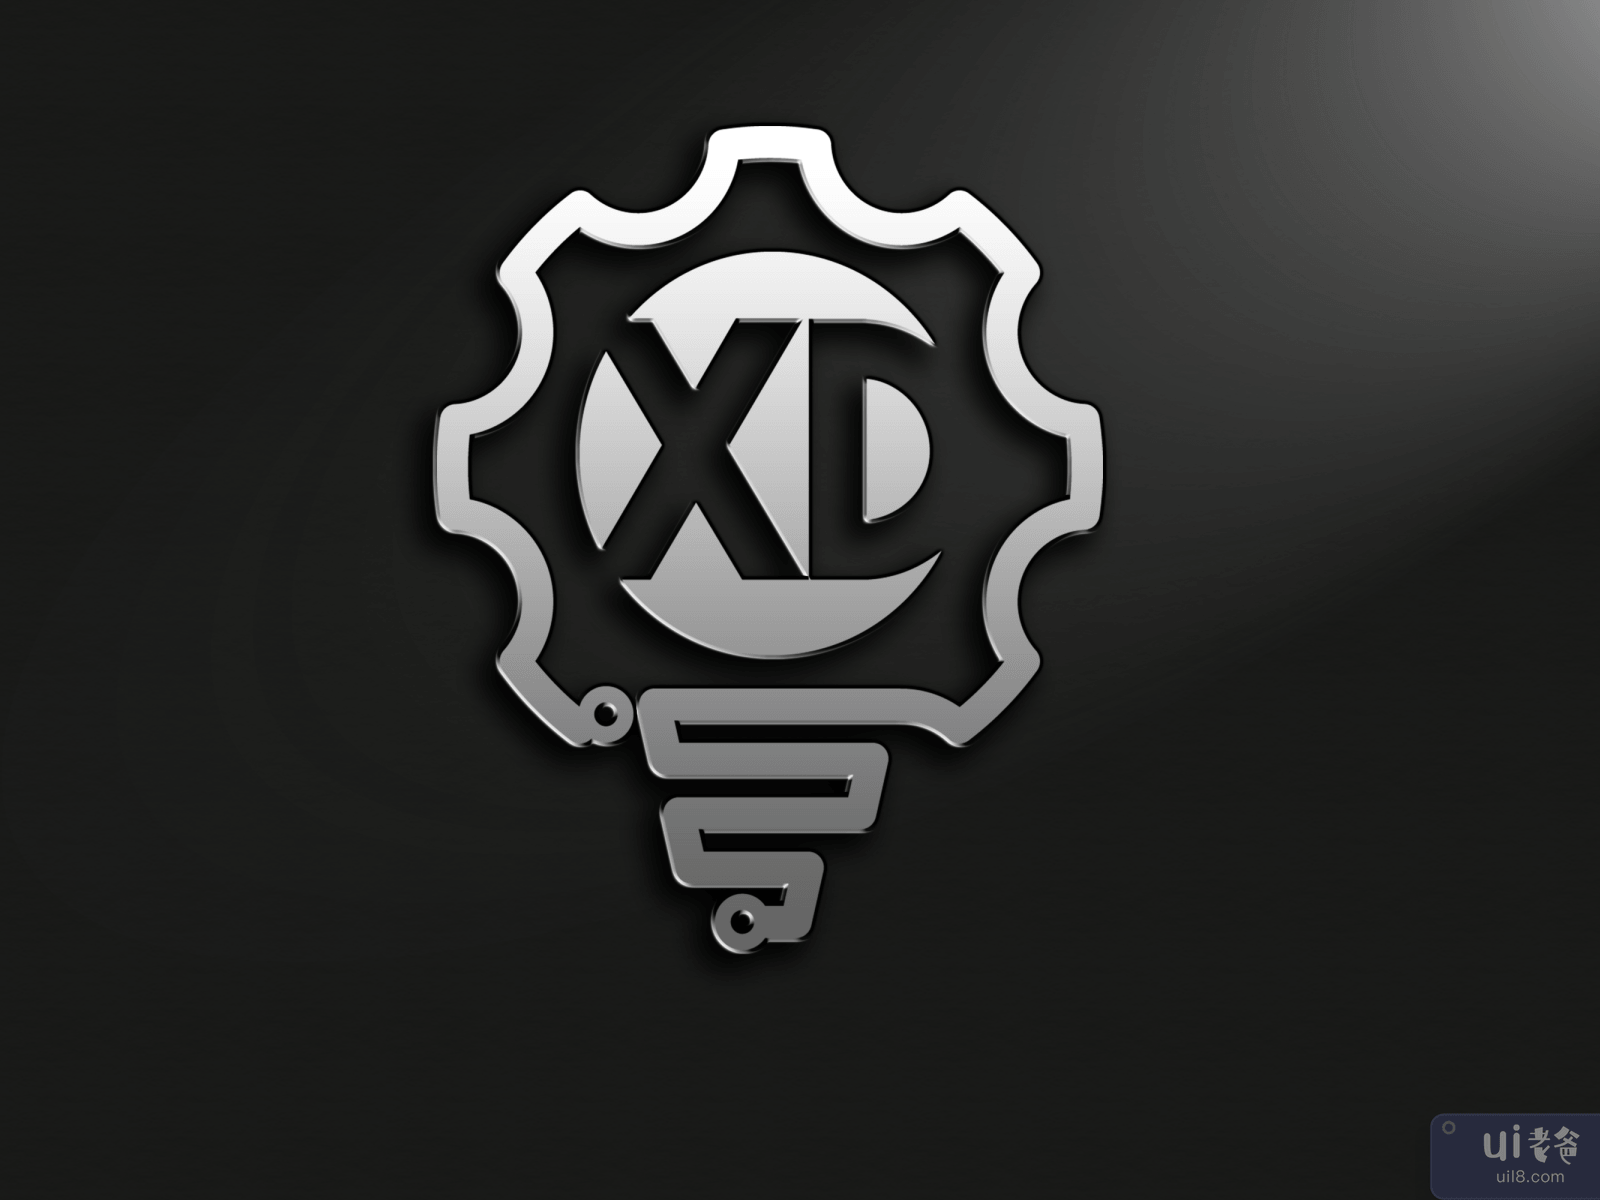 3d XD Logo Design